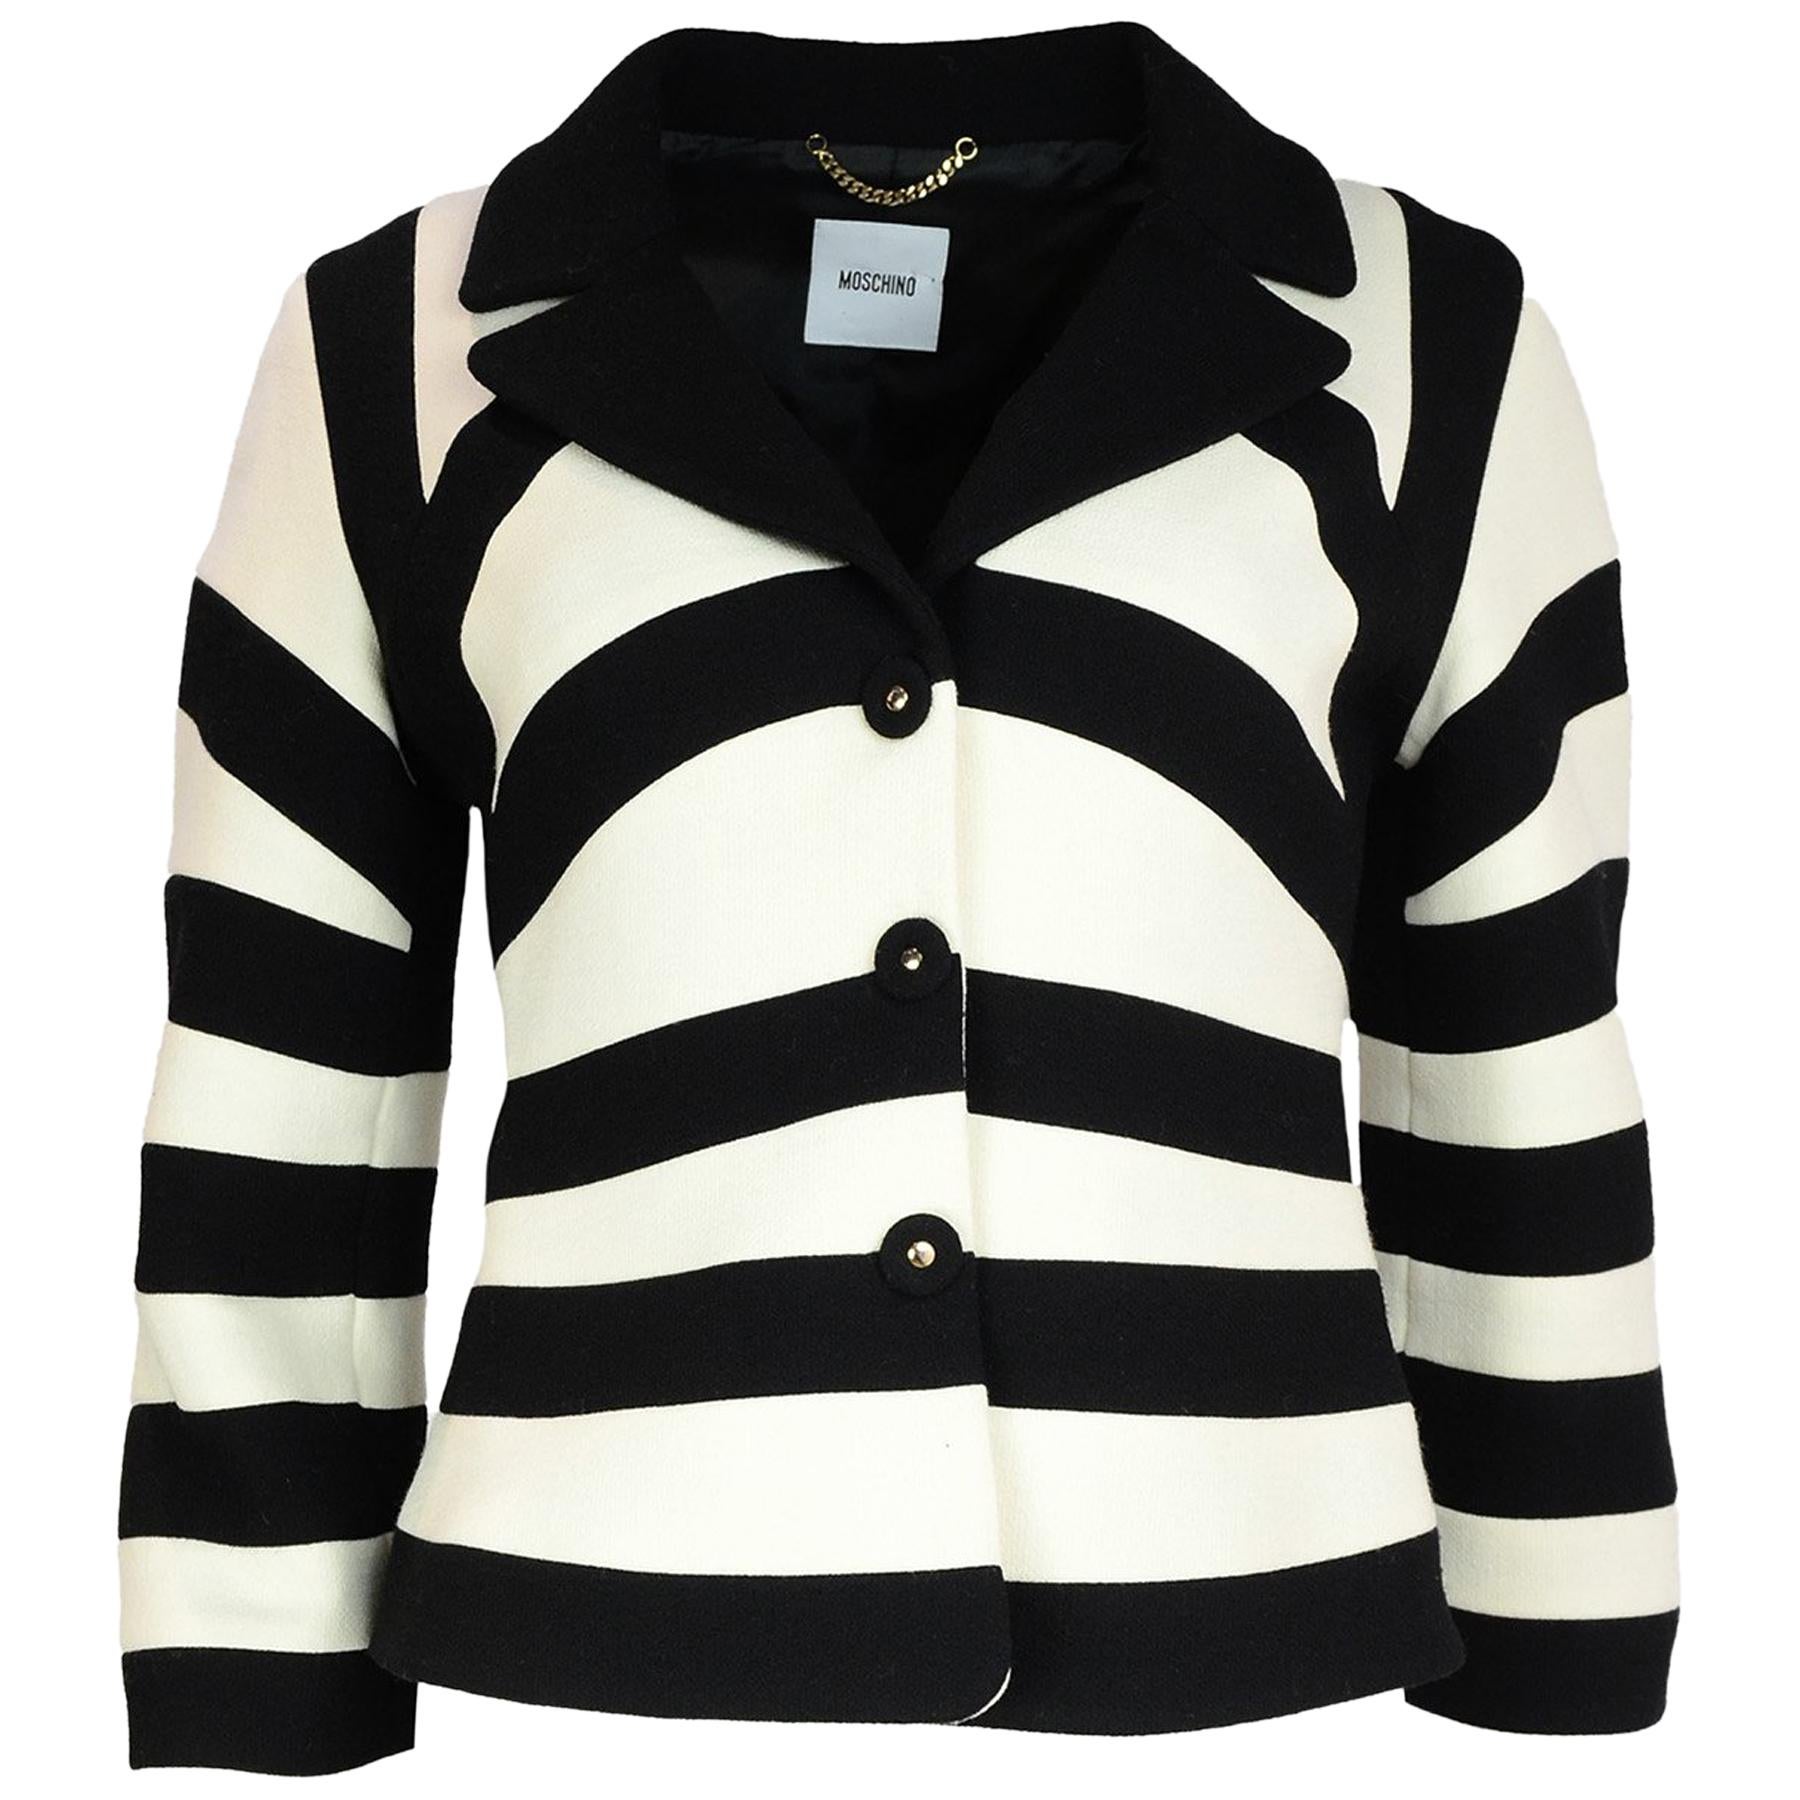 Moschino Black & White Stripe/Chevron 3/4 Sleeve Jacket Blazer Sz 8